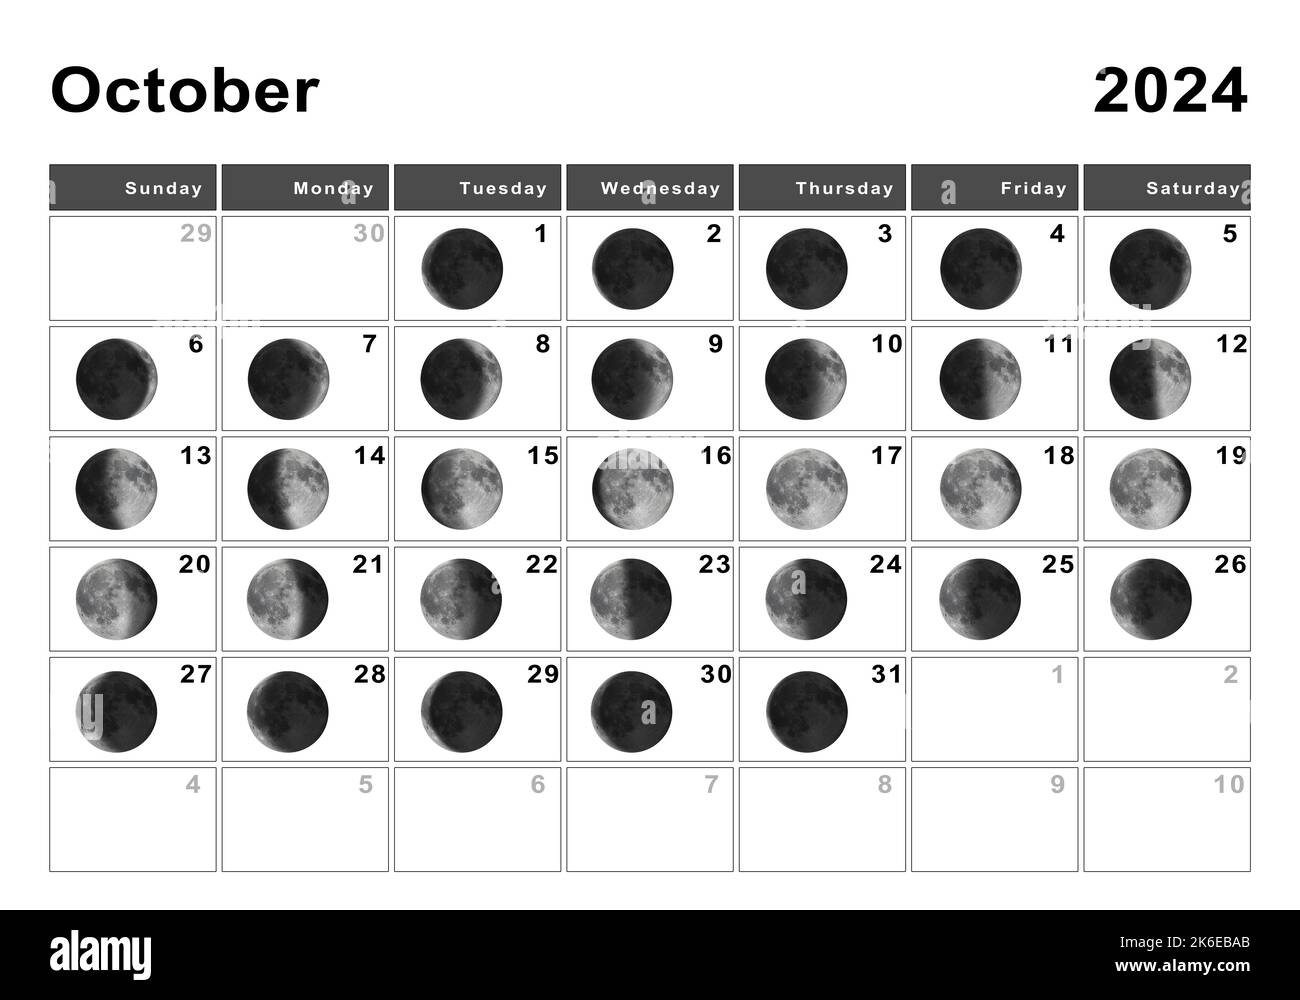 October 2024 Lunar calendar, Moon cycles, Moon Phases Stock Photo Alamy